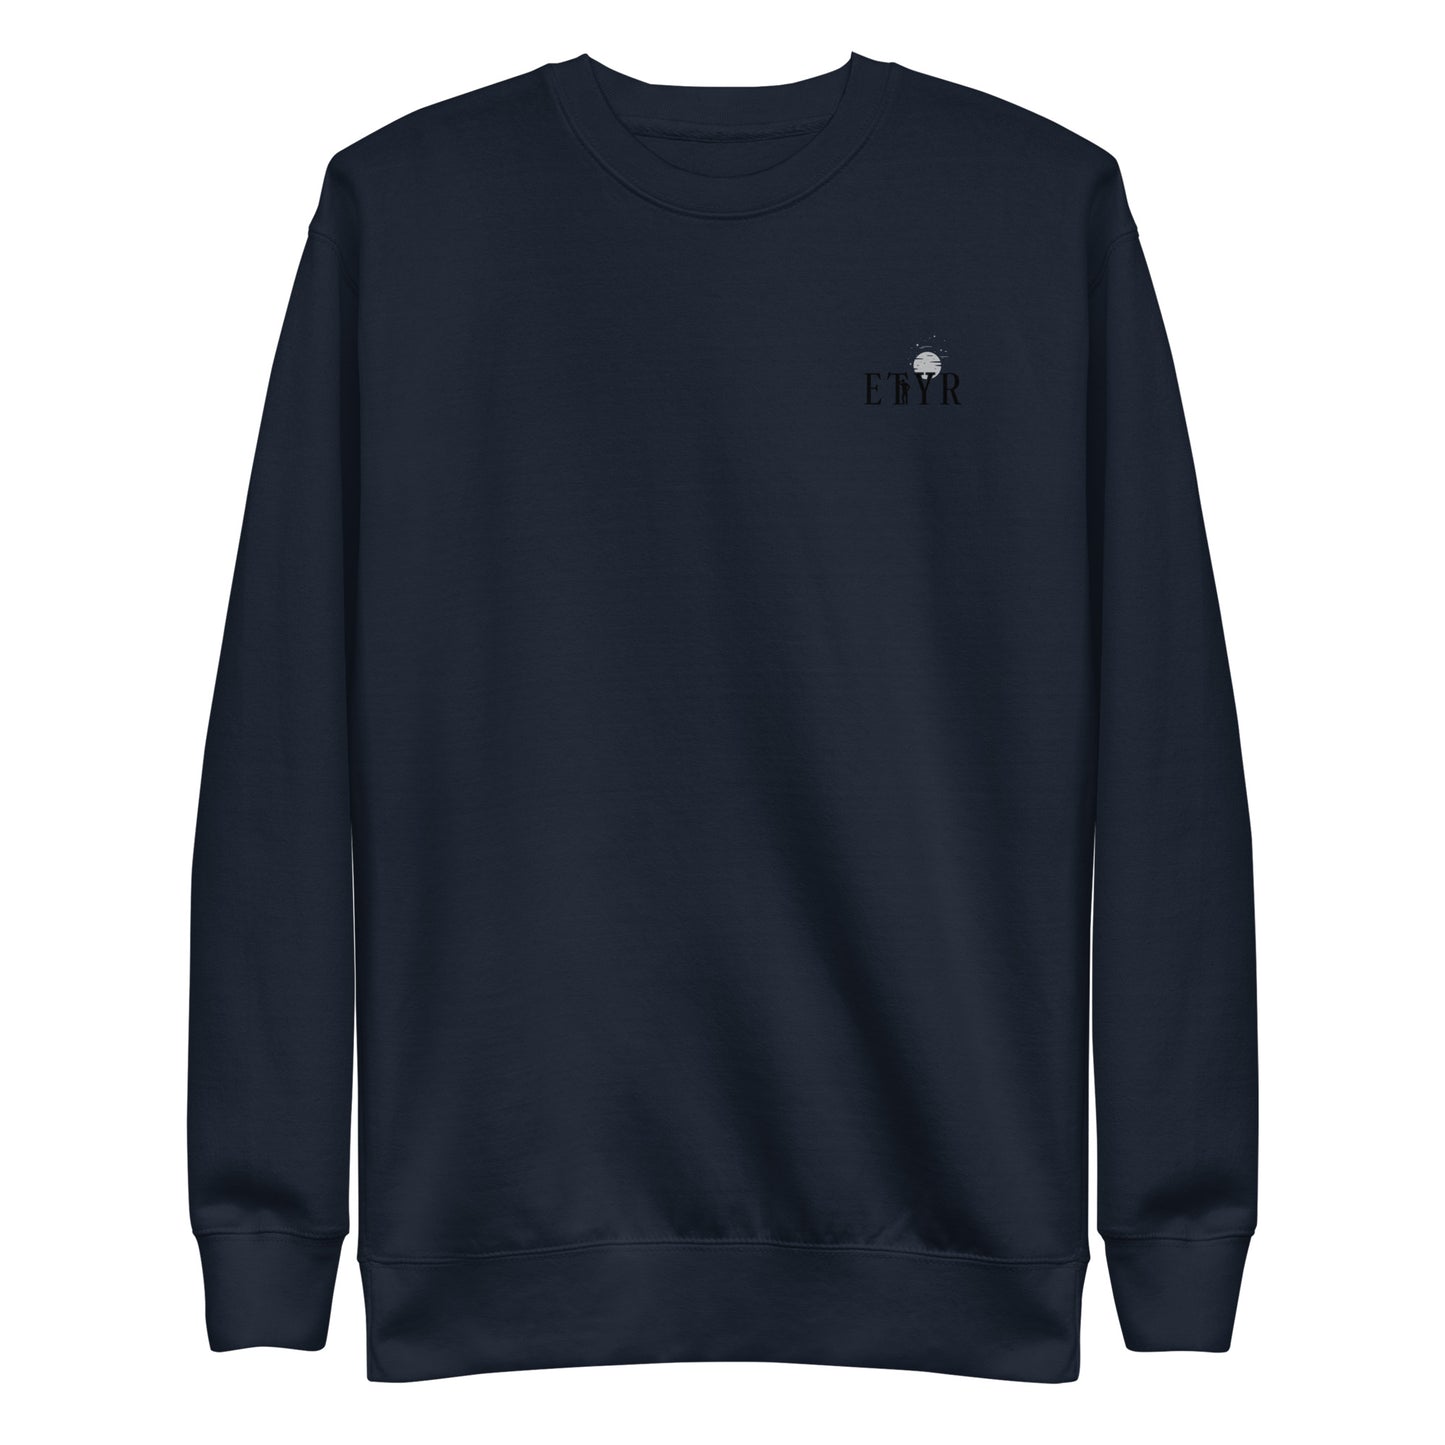 ETYR Premium Sweatshirt